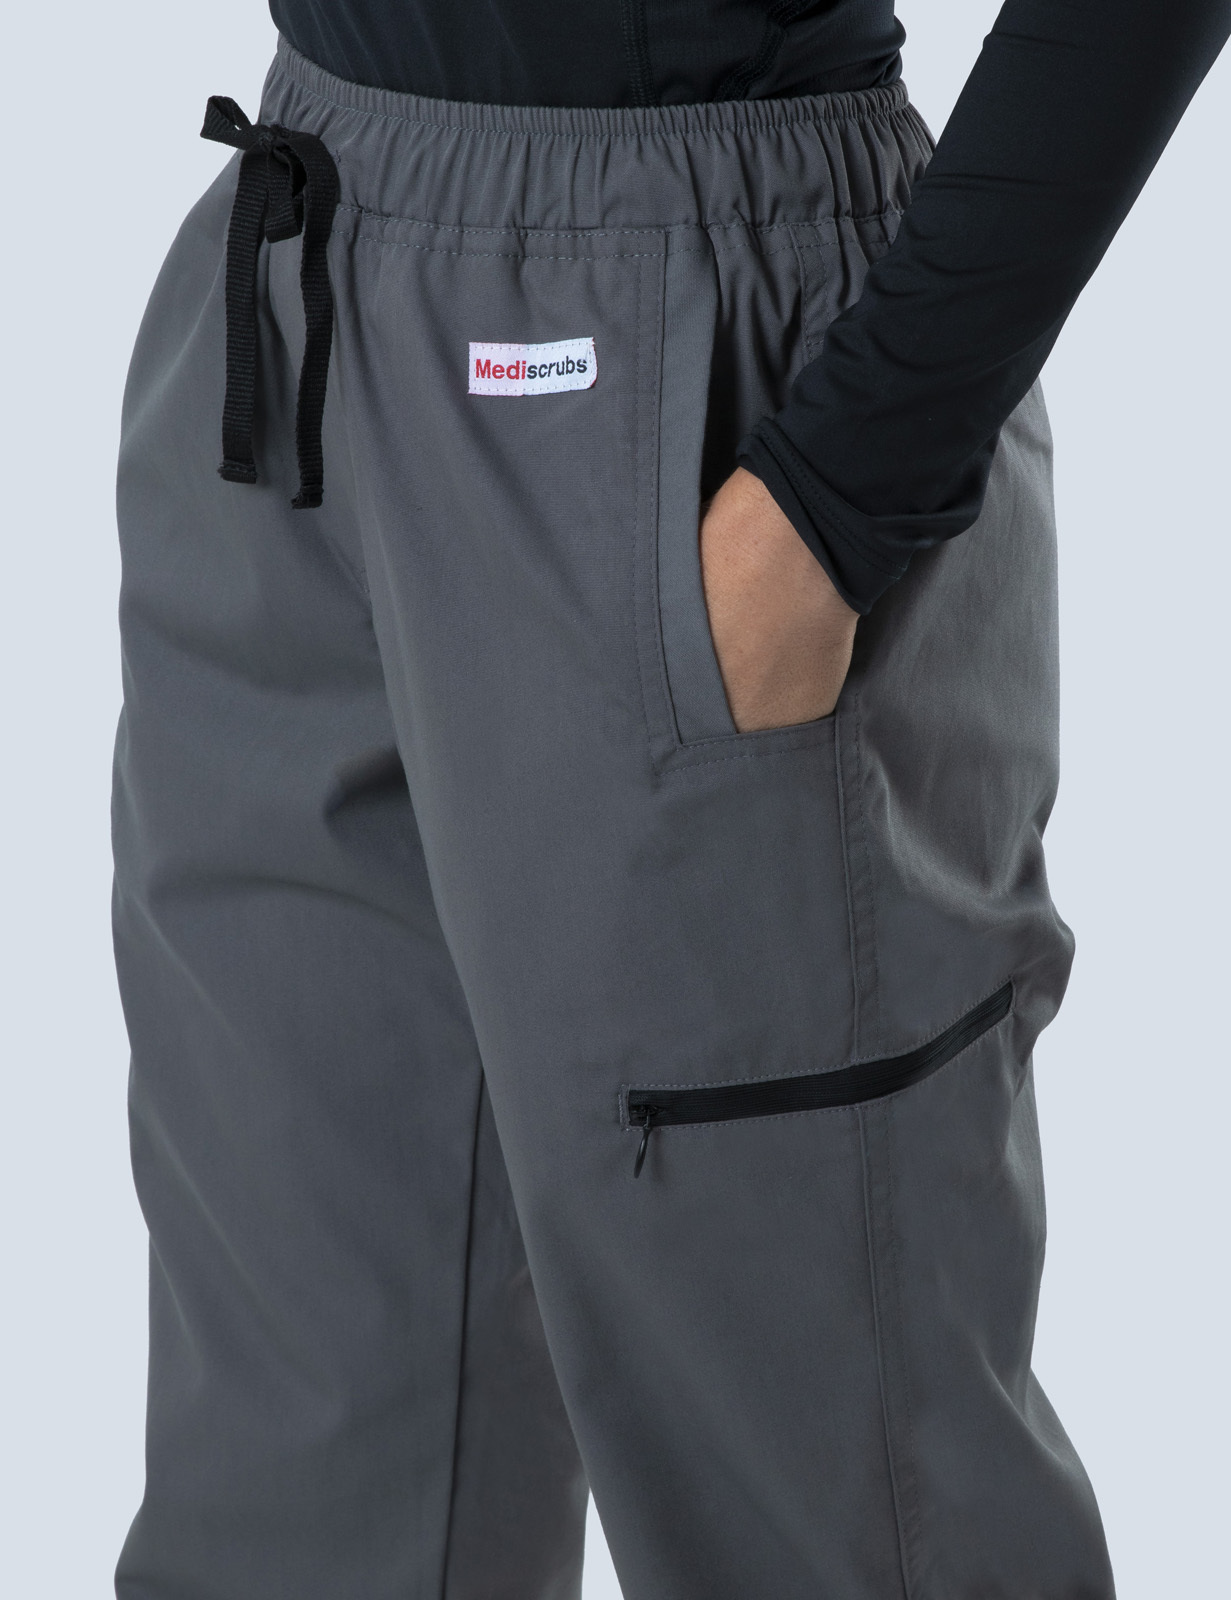 Women's Utility Pants - Steel Grey - Large - Tall - 1